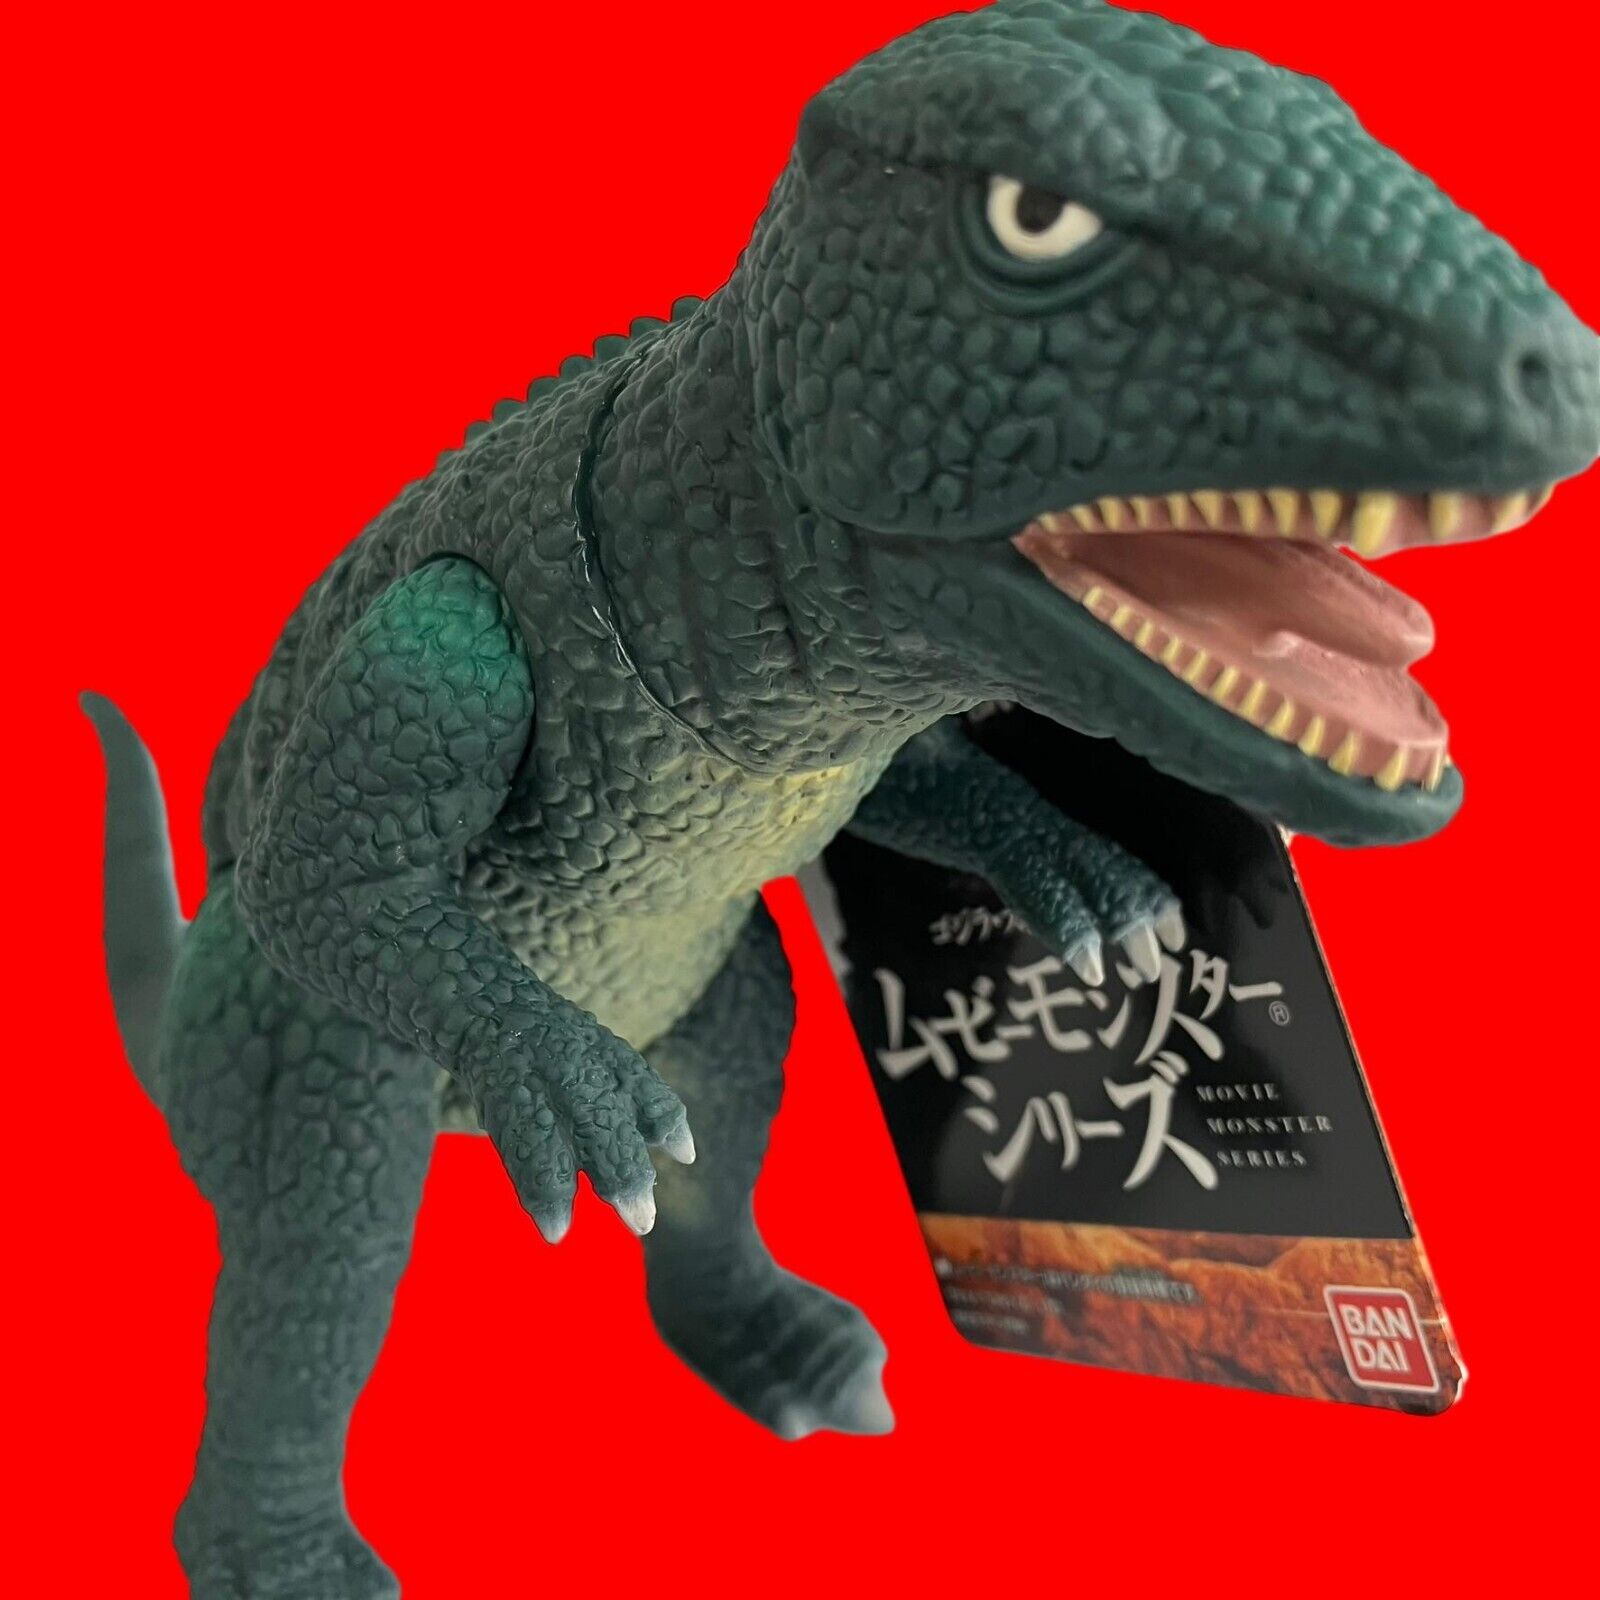 Bandai Godzilla Movie Monster Series Gorosaurus Pvc Action Figure 130mm 5.11inch